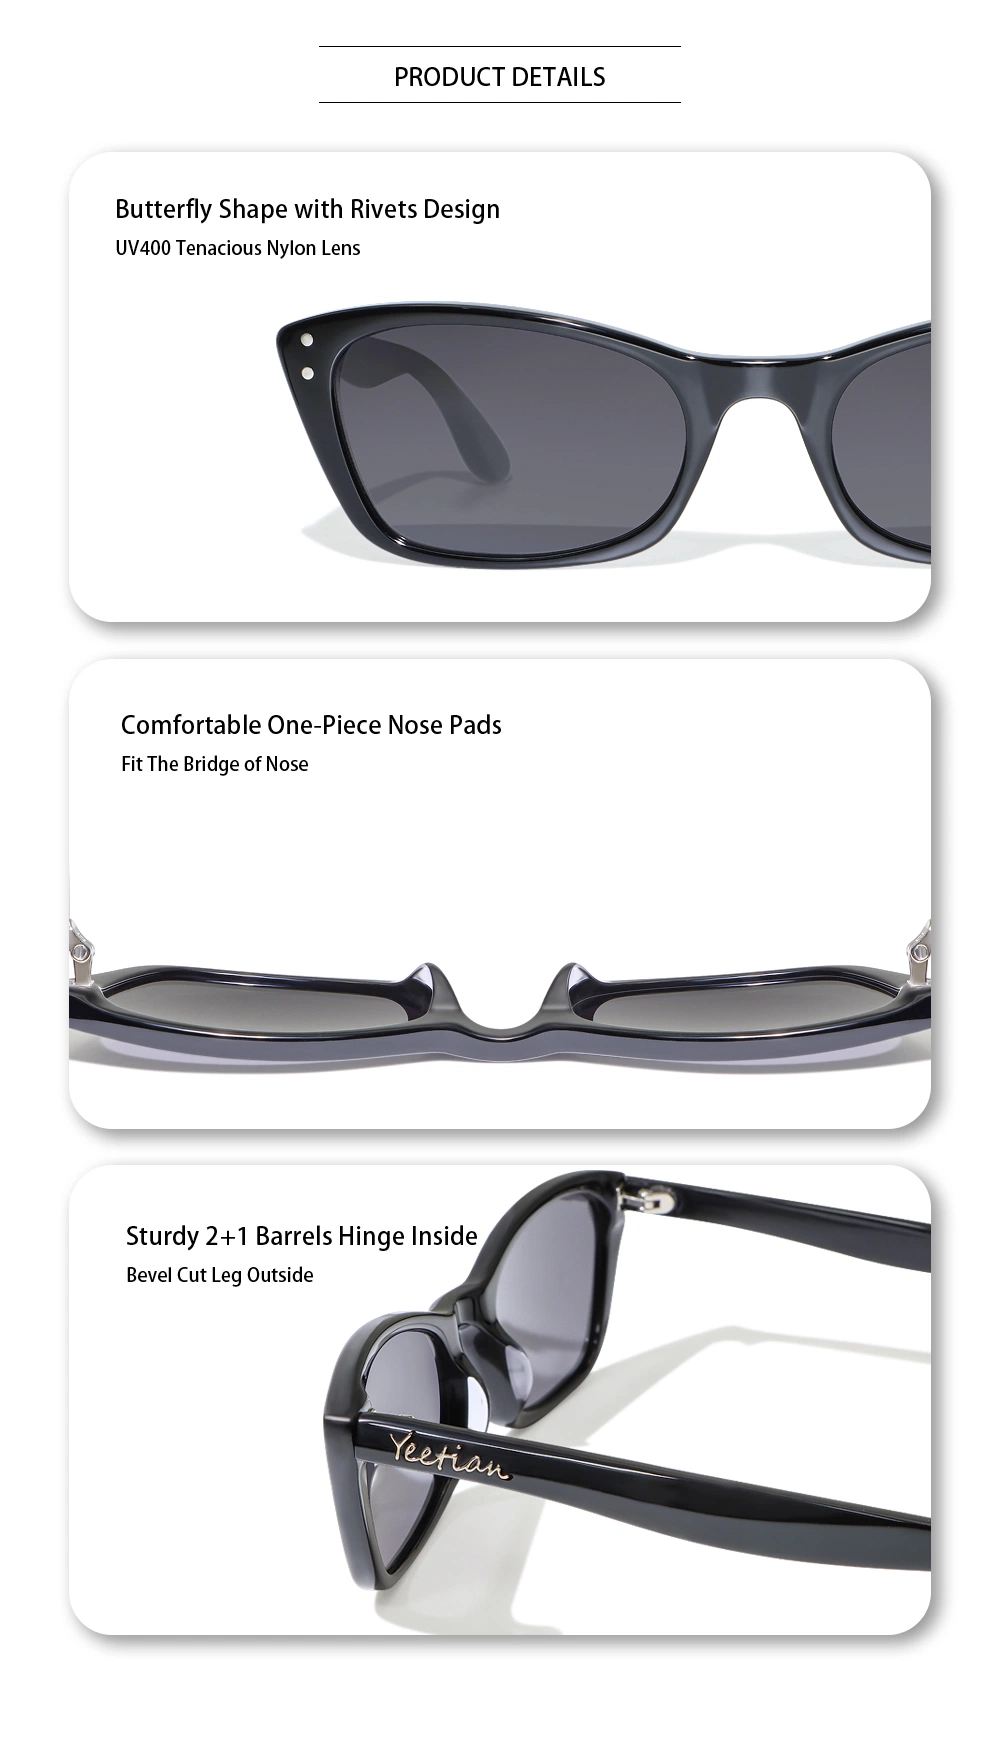 Yeetian Black Biodegradable Famous Brands Designer Polarized Men Acetate Sunglasses